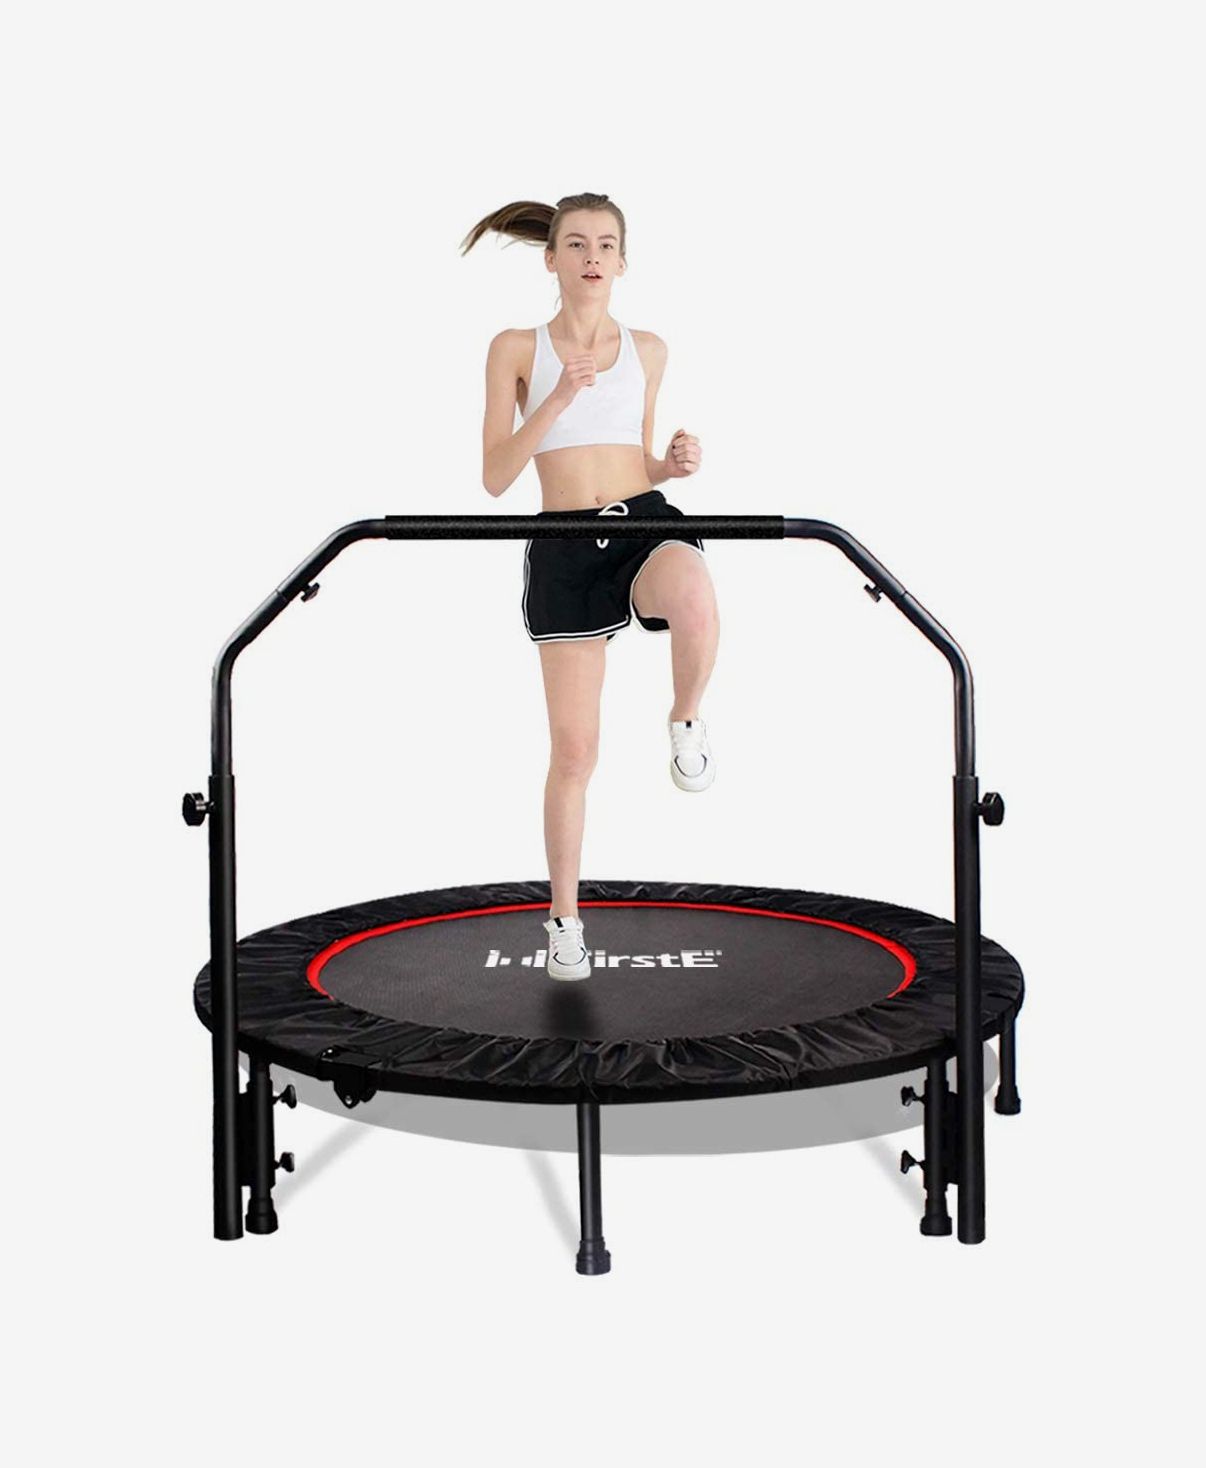 48" Mini Trampoline Fitness Exercise Gym Rebounder Cardio Trainer Jump OT064 